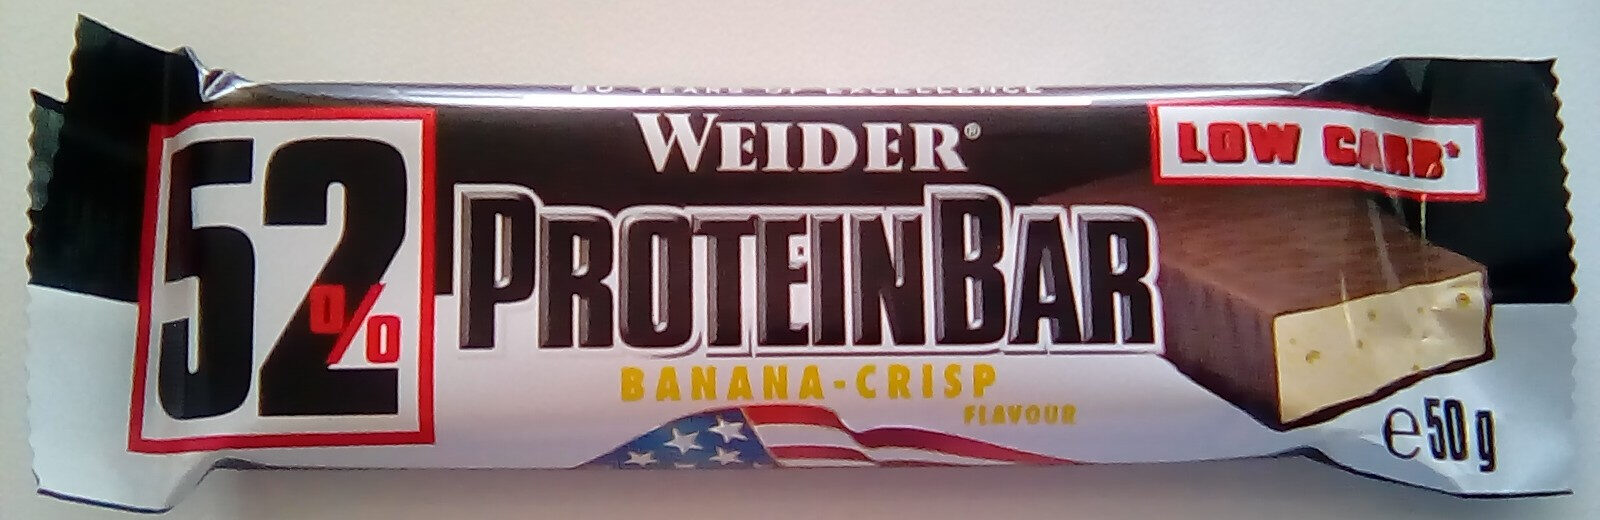 Protein bar banana-crisp flavour - Προϊόν - en